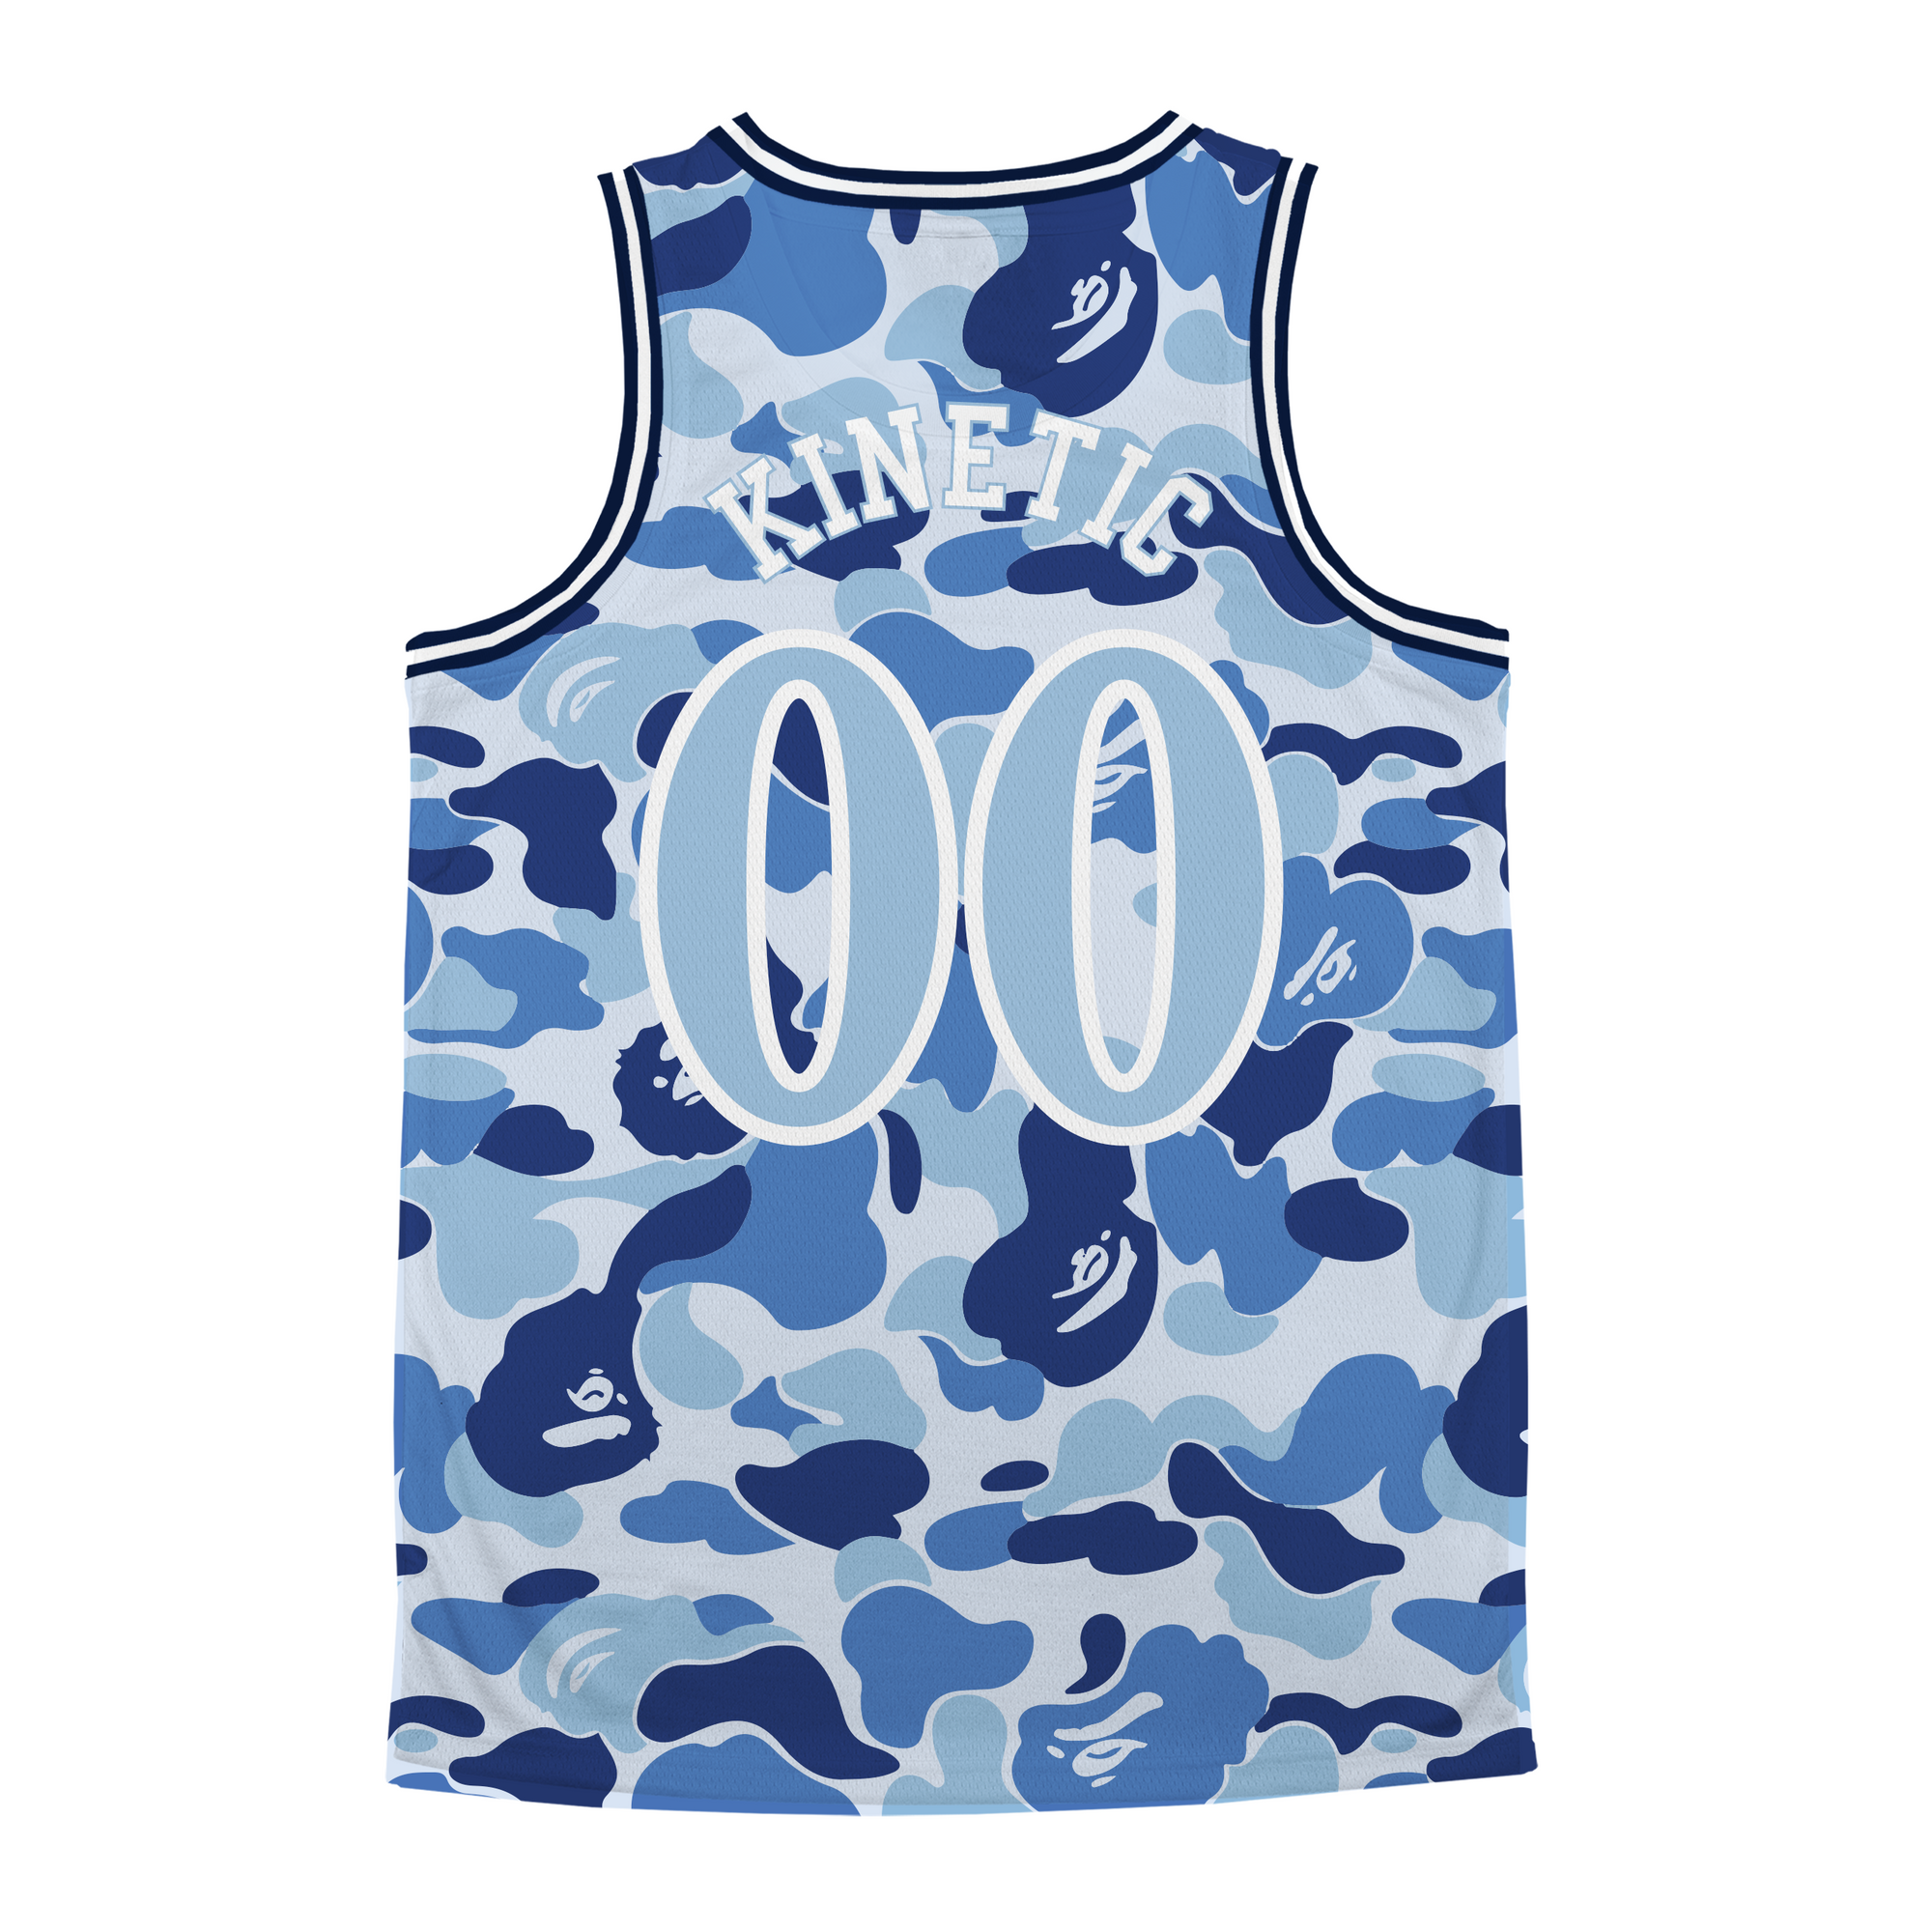 Kappa Sigma - Blue Camo Basketball Jersey